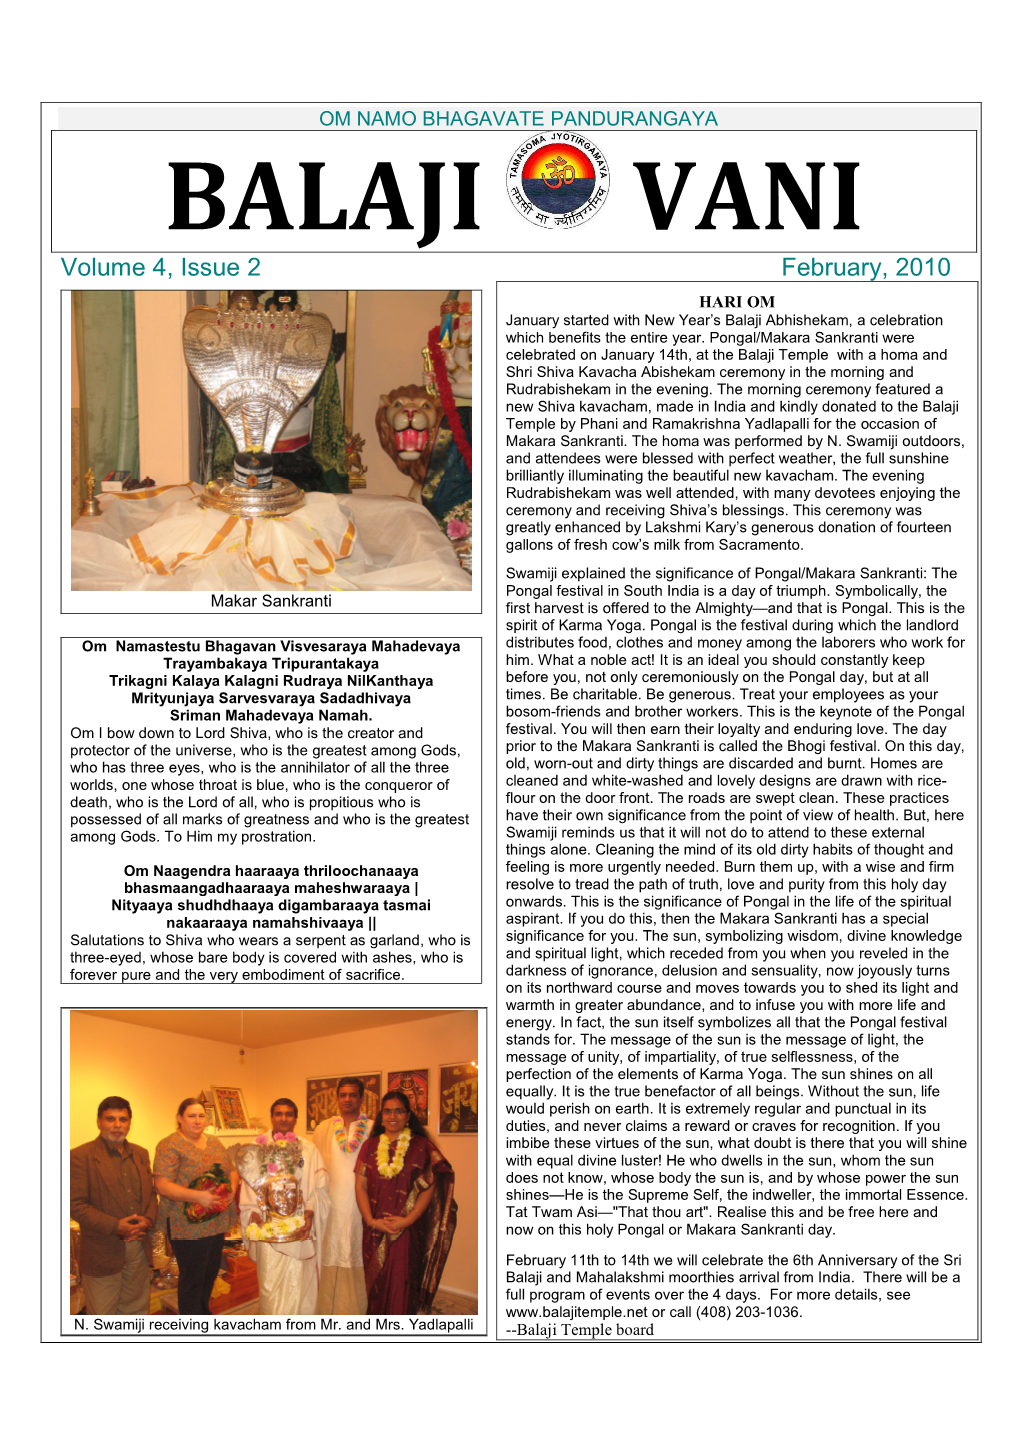 BALAJI VANI Volume 4, Issue 2 February, 2010